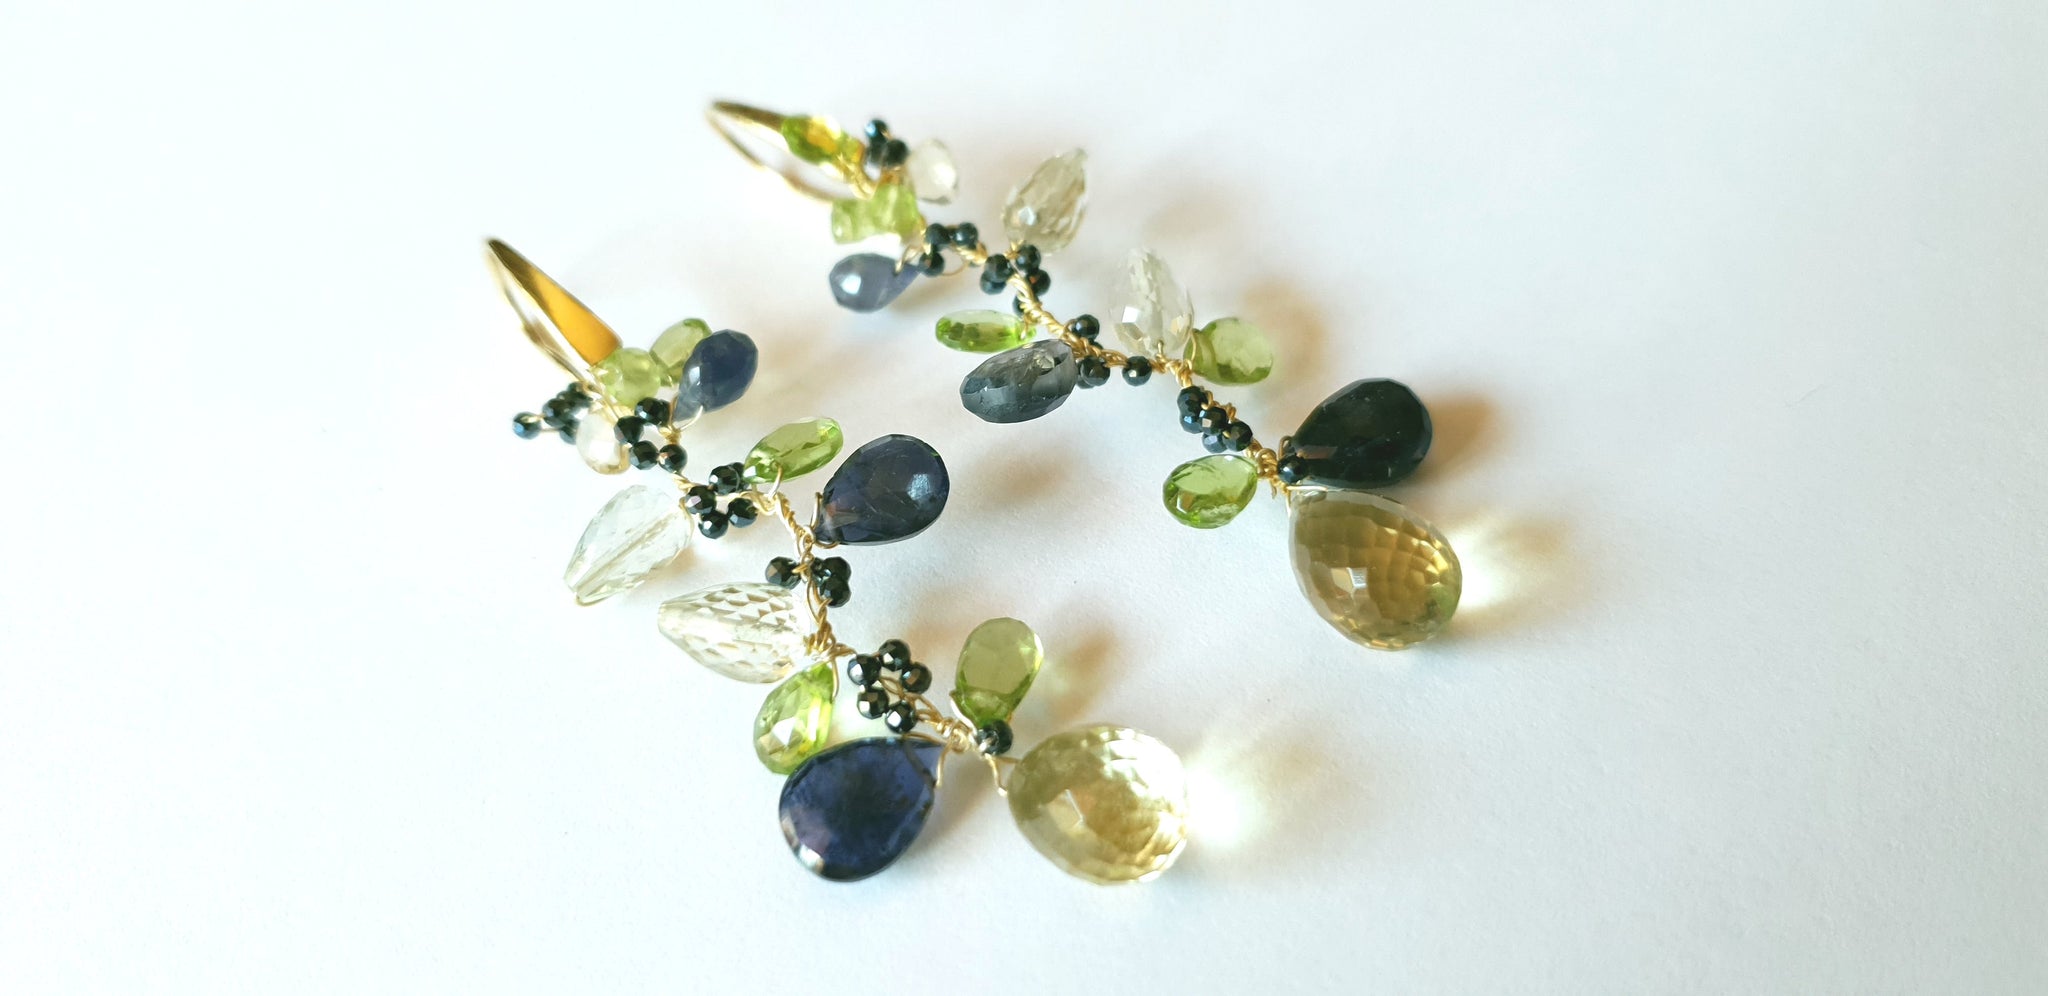 Pendant earrings with lemon quartz, iolite, peridot, prasiolite, blue spinel